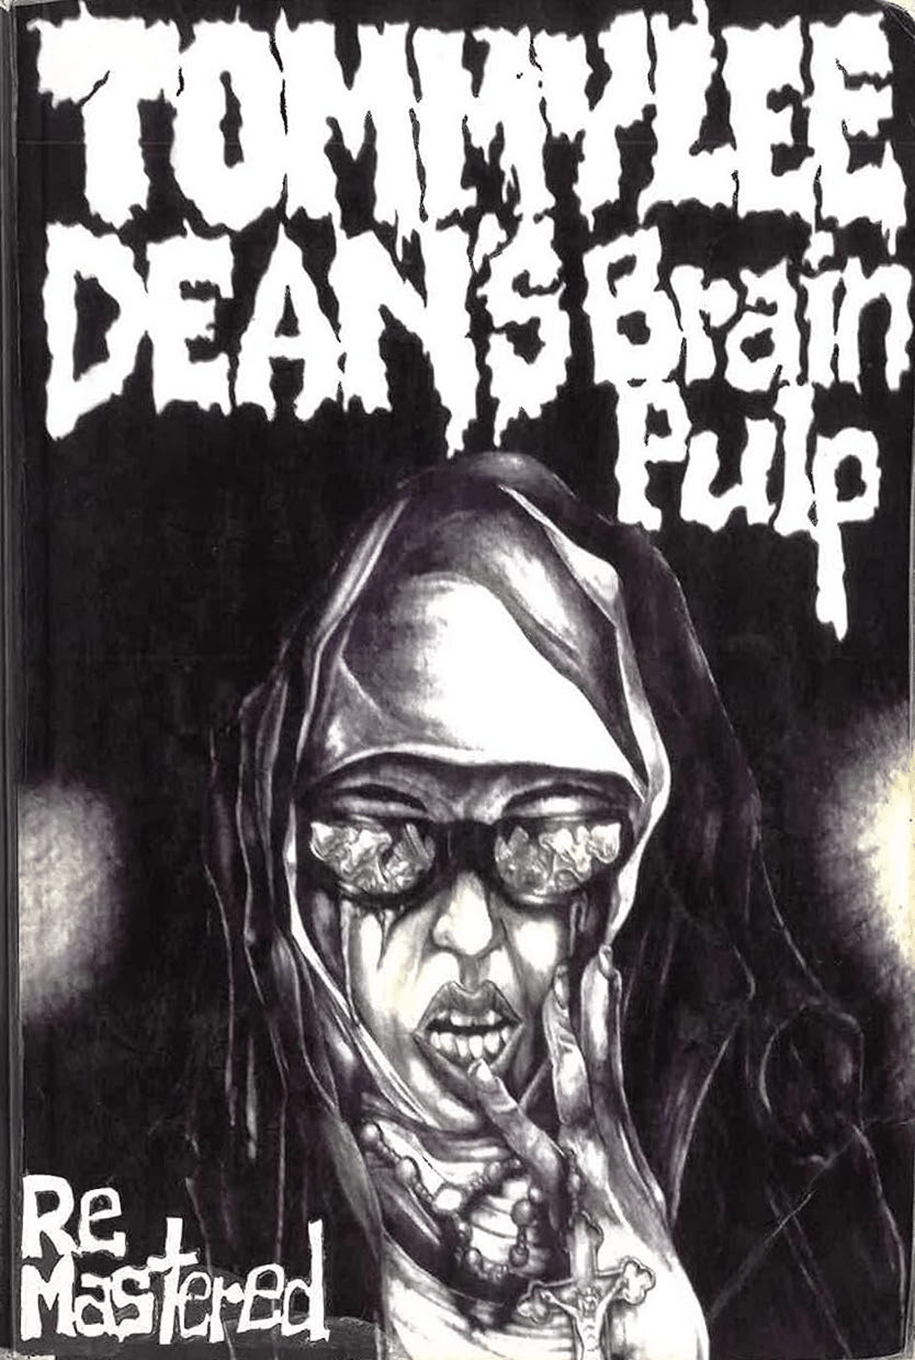 Cover of book, Brain Pulp